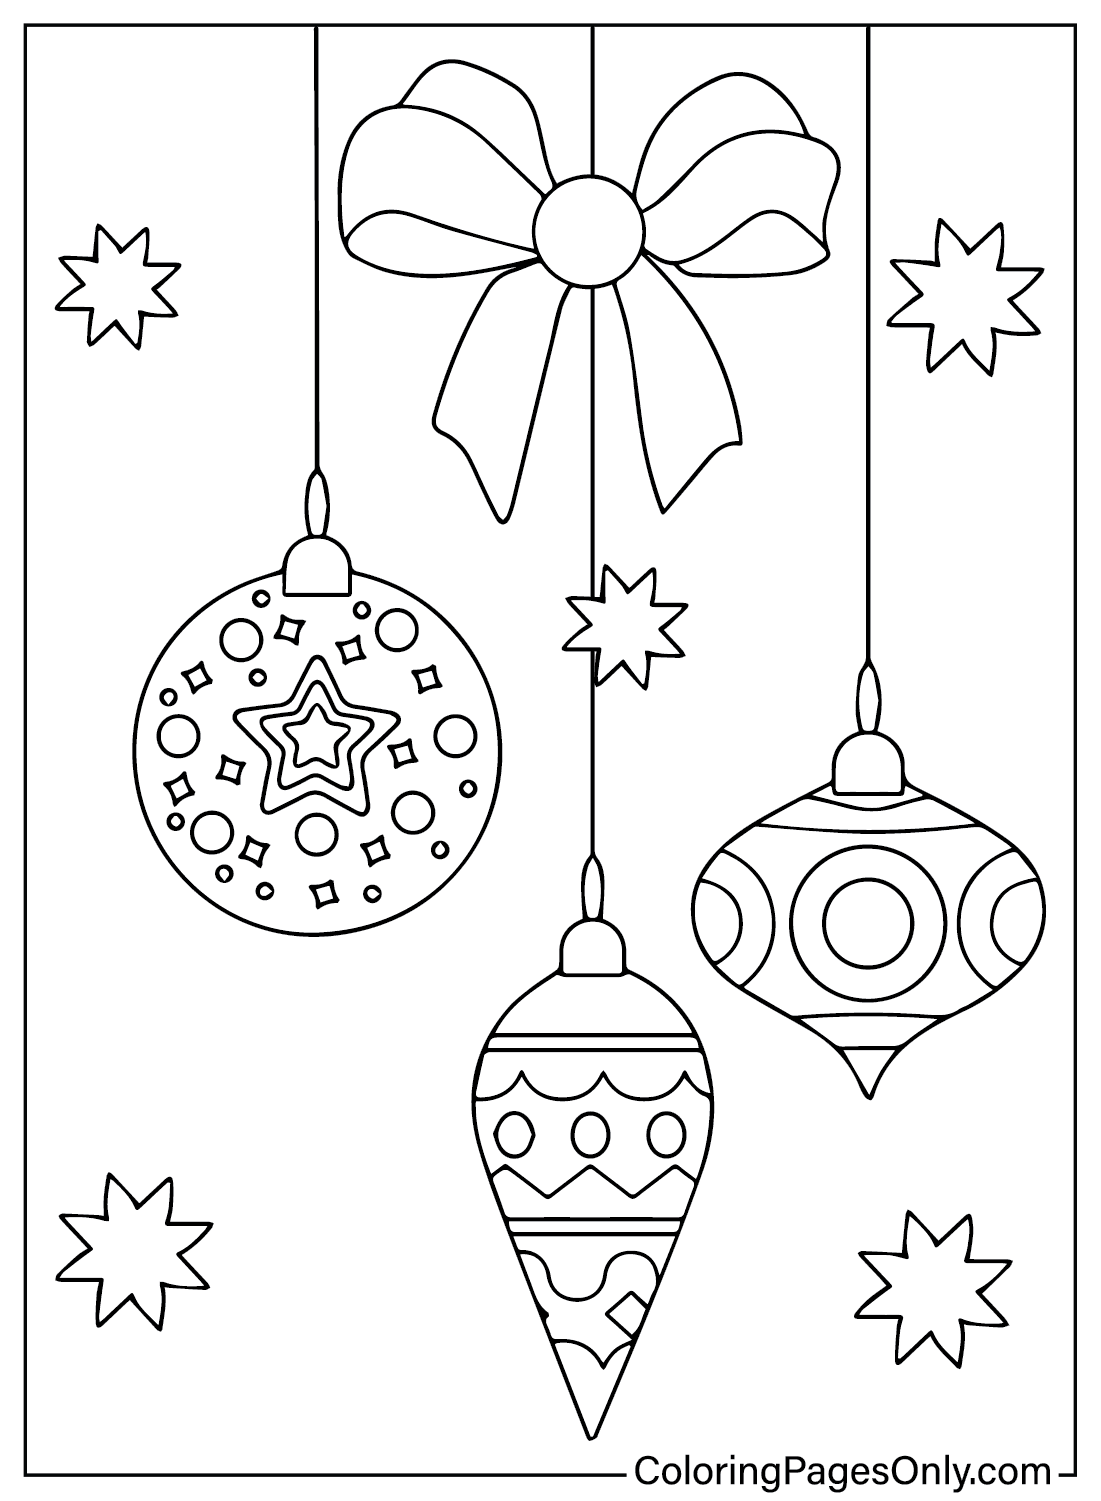 Página para colorir de enfeites de Natal de Enfeites de Natal